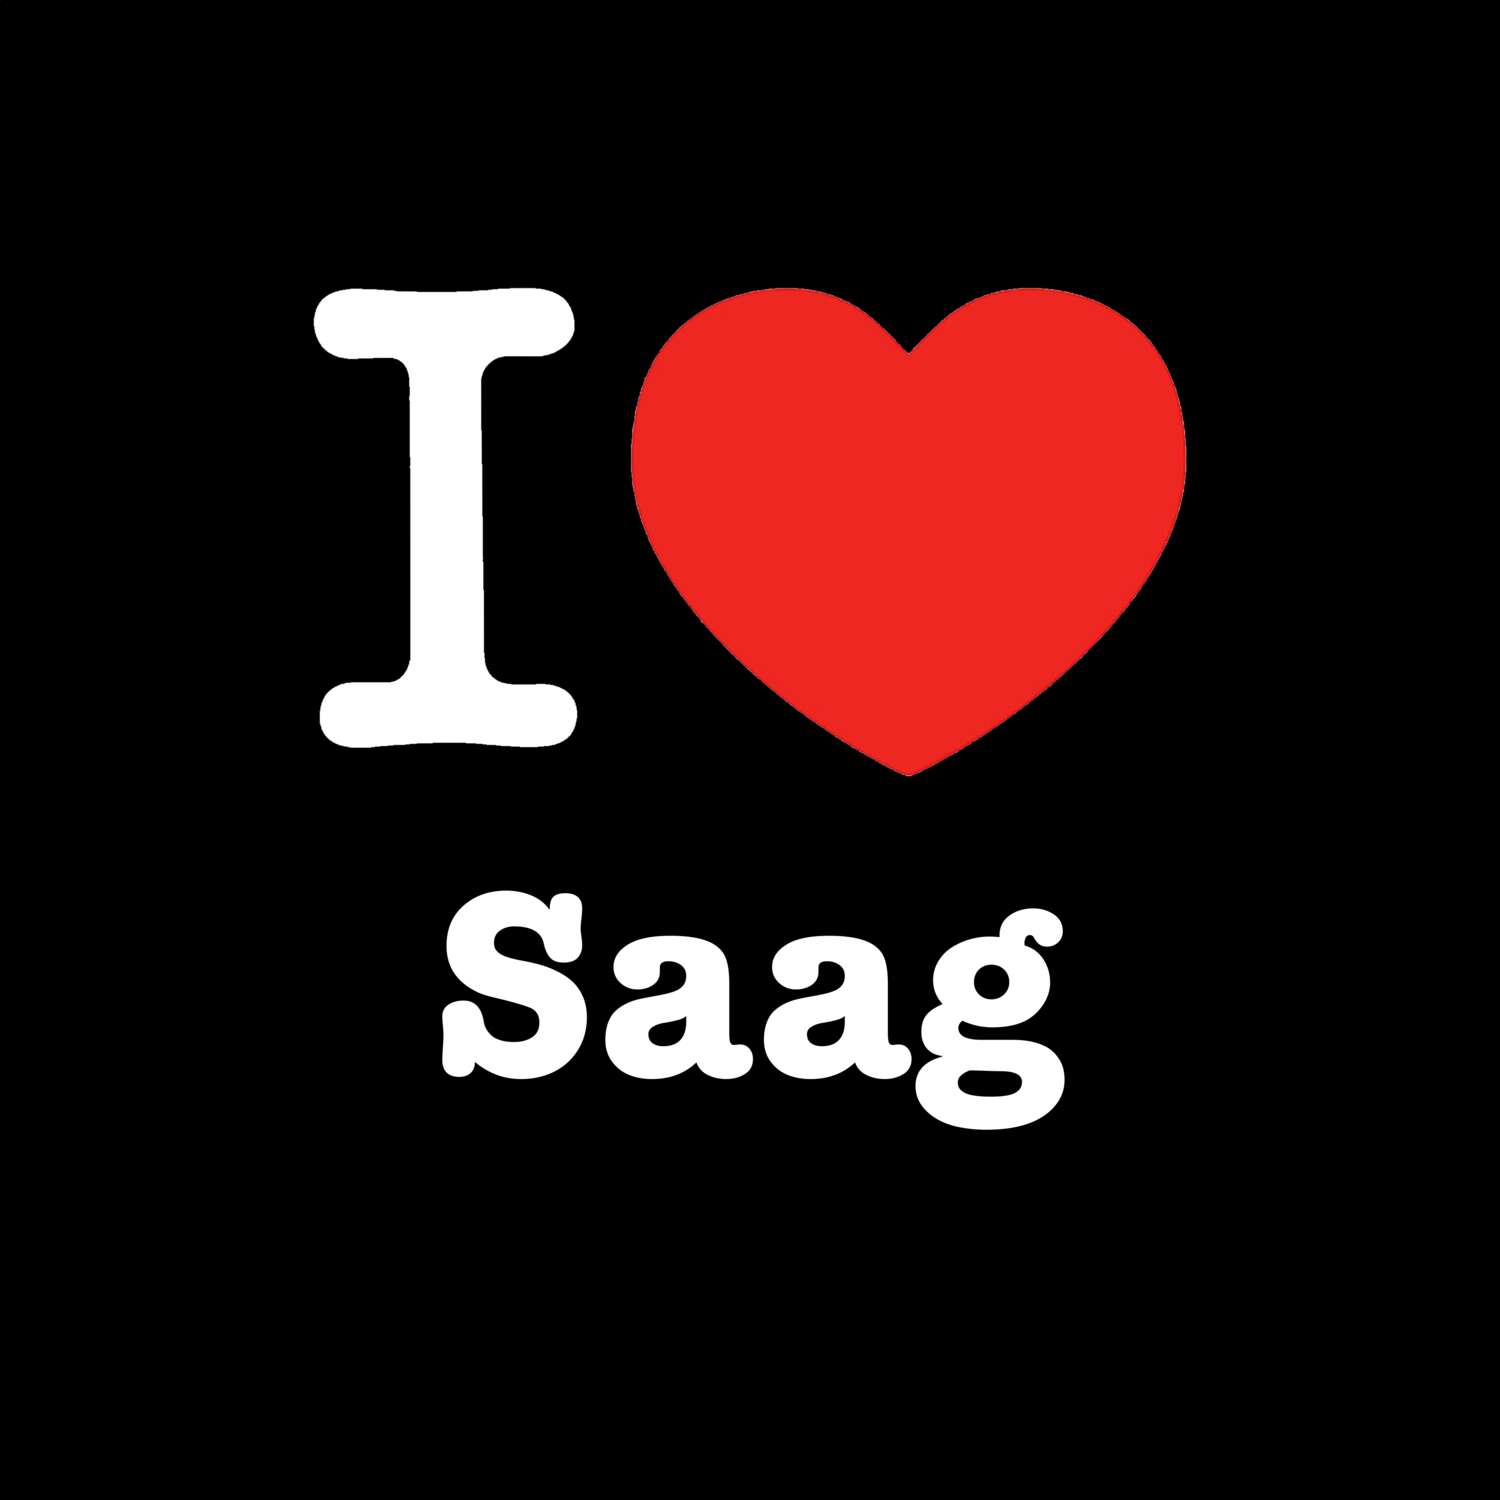 Saag T-Shirt »I love«